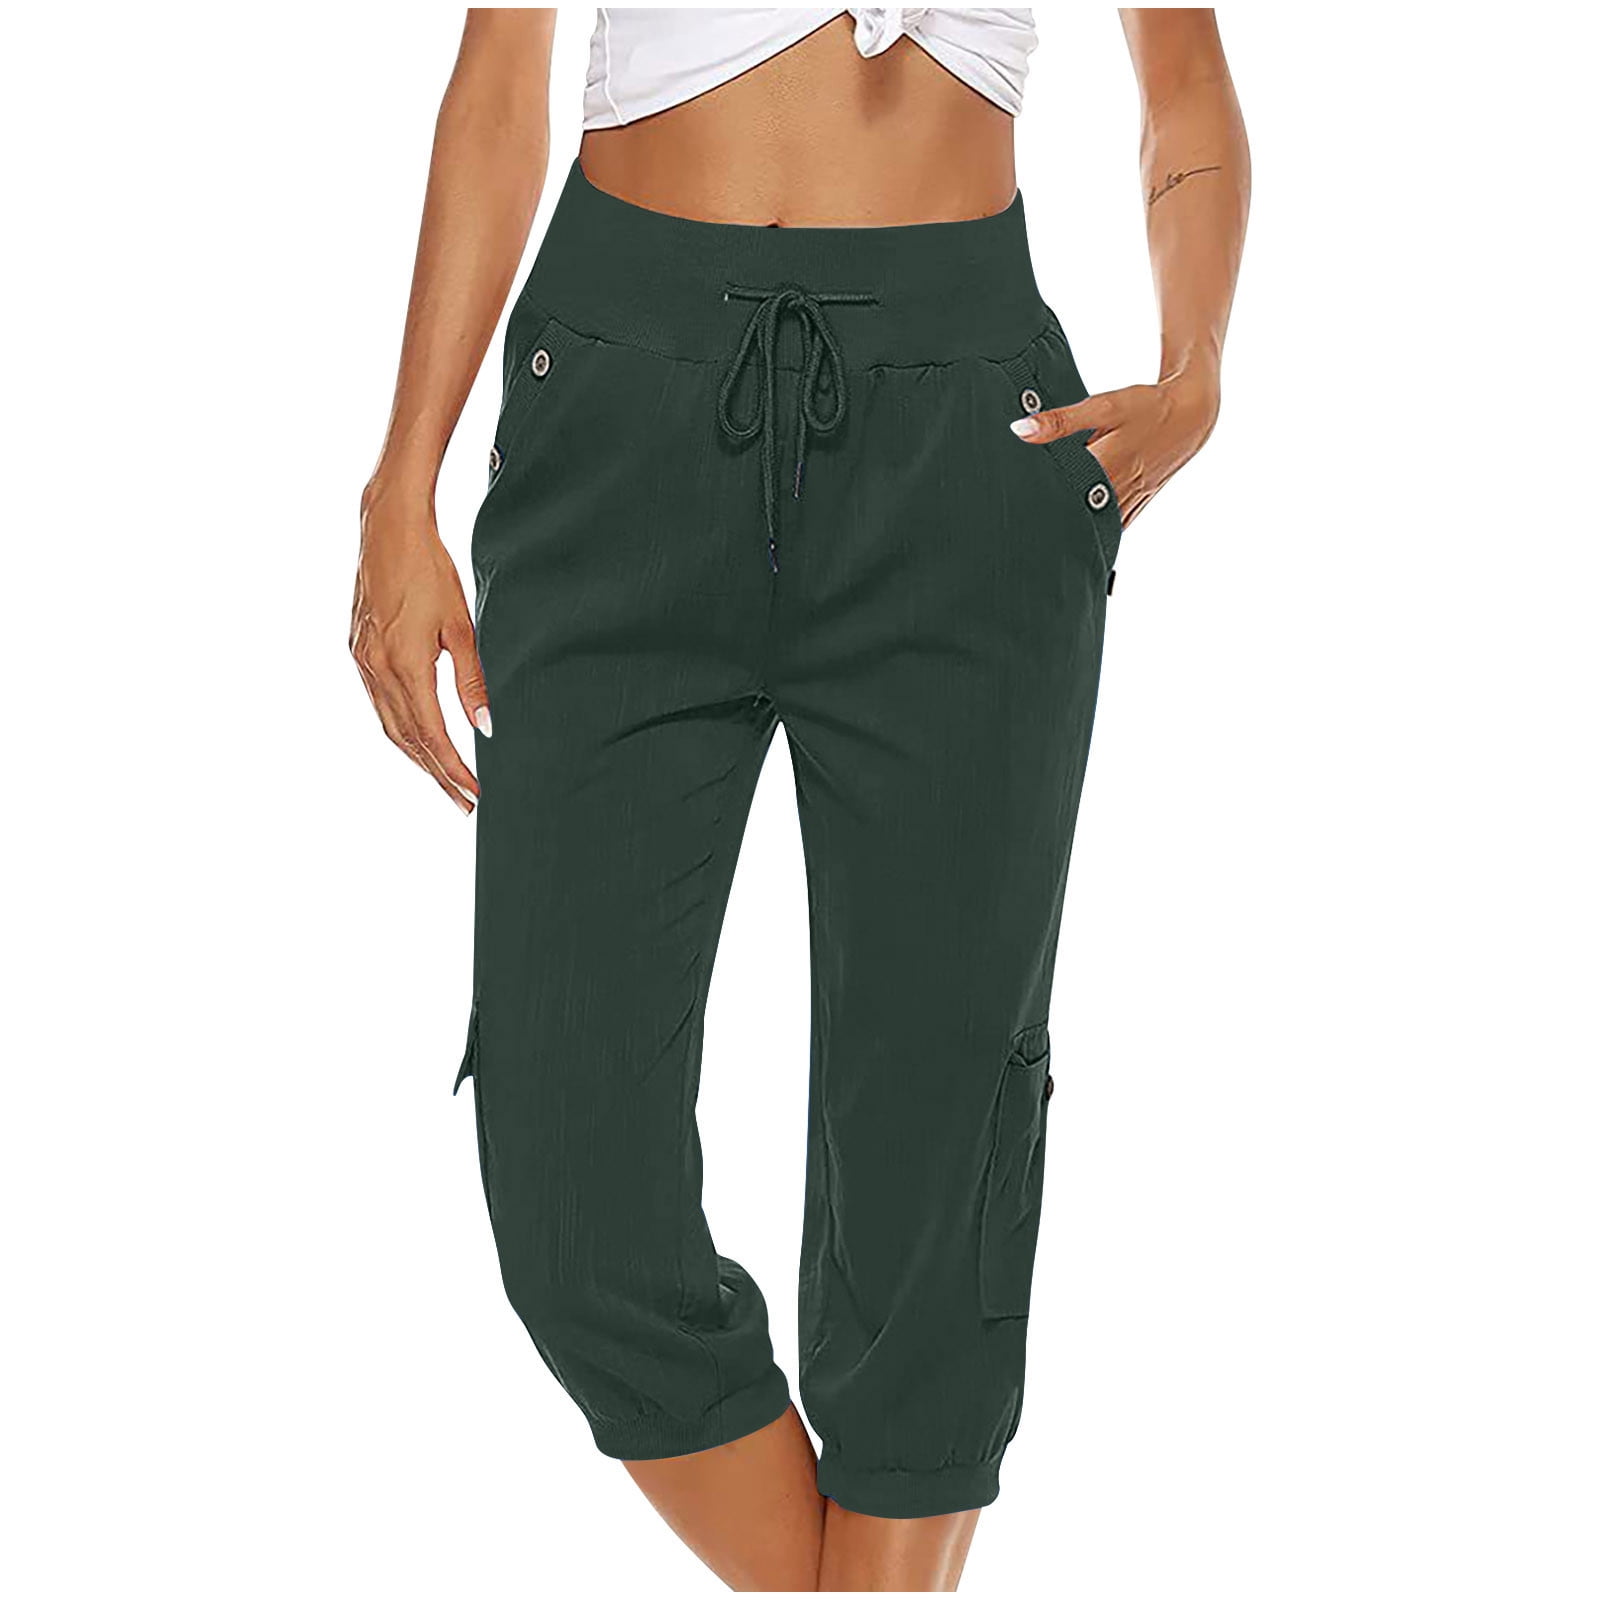 Capri Pants for Women Cotton Linen Plus Size Cargo Pants Capris Elastic  High Waisted 3/4 Slacks with Multi Pockets (4X-Large, Green) 